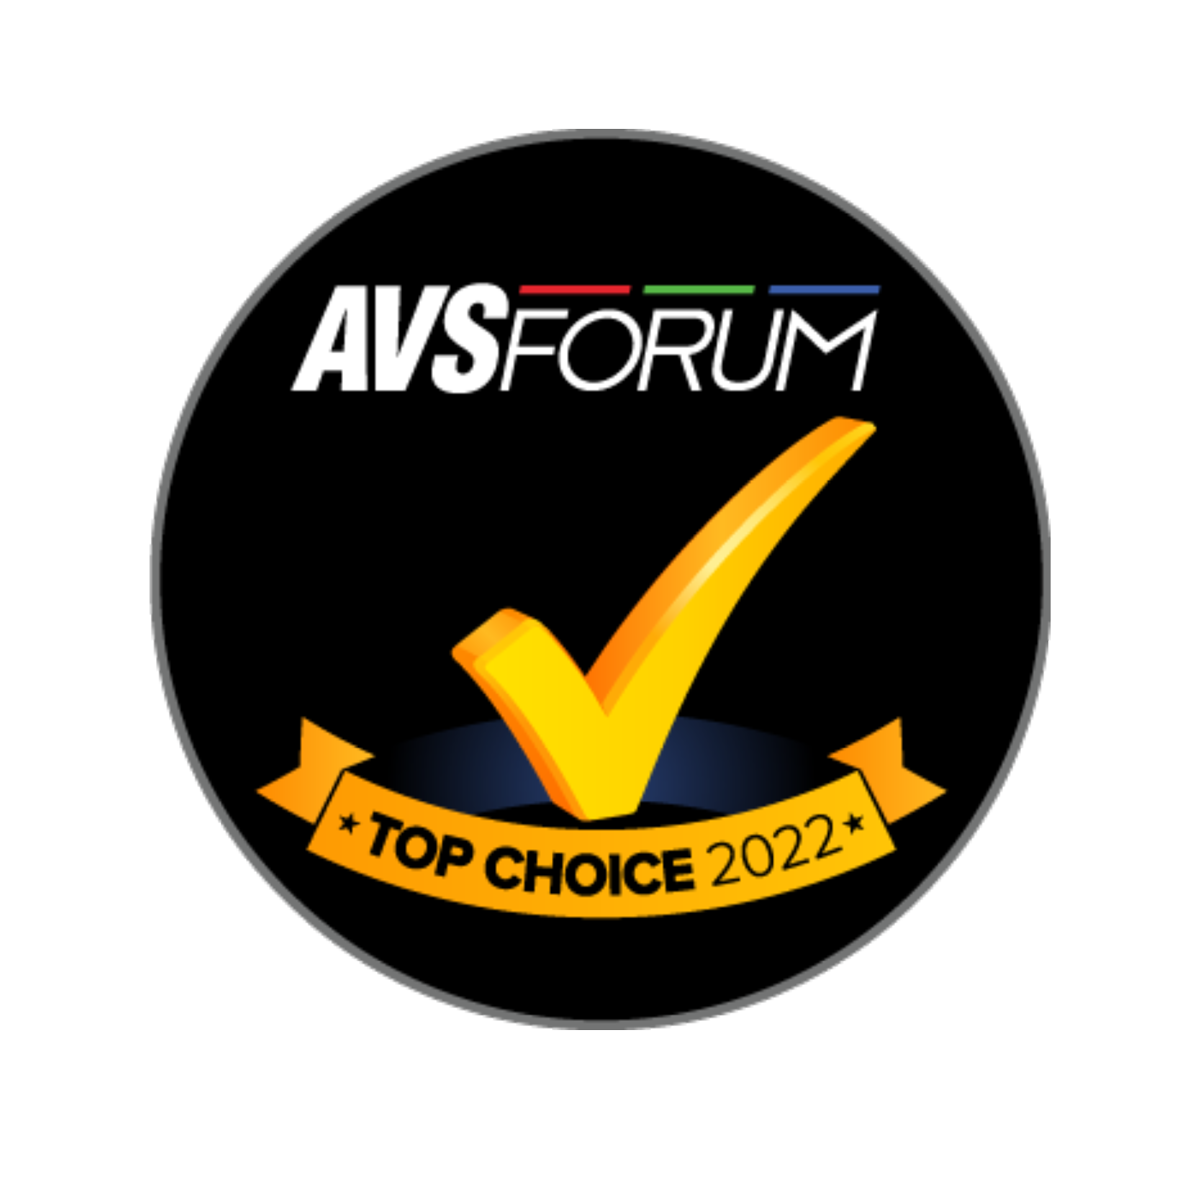 AVS Forum: Top Choice 2022